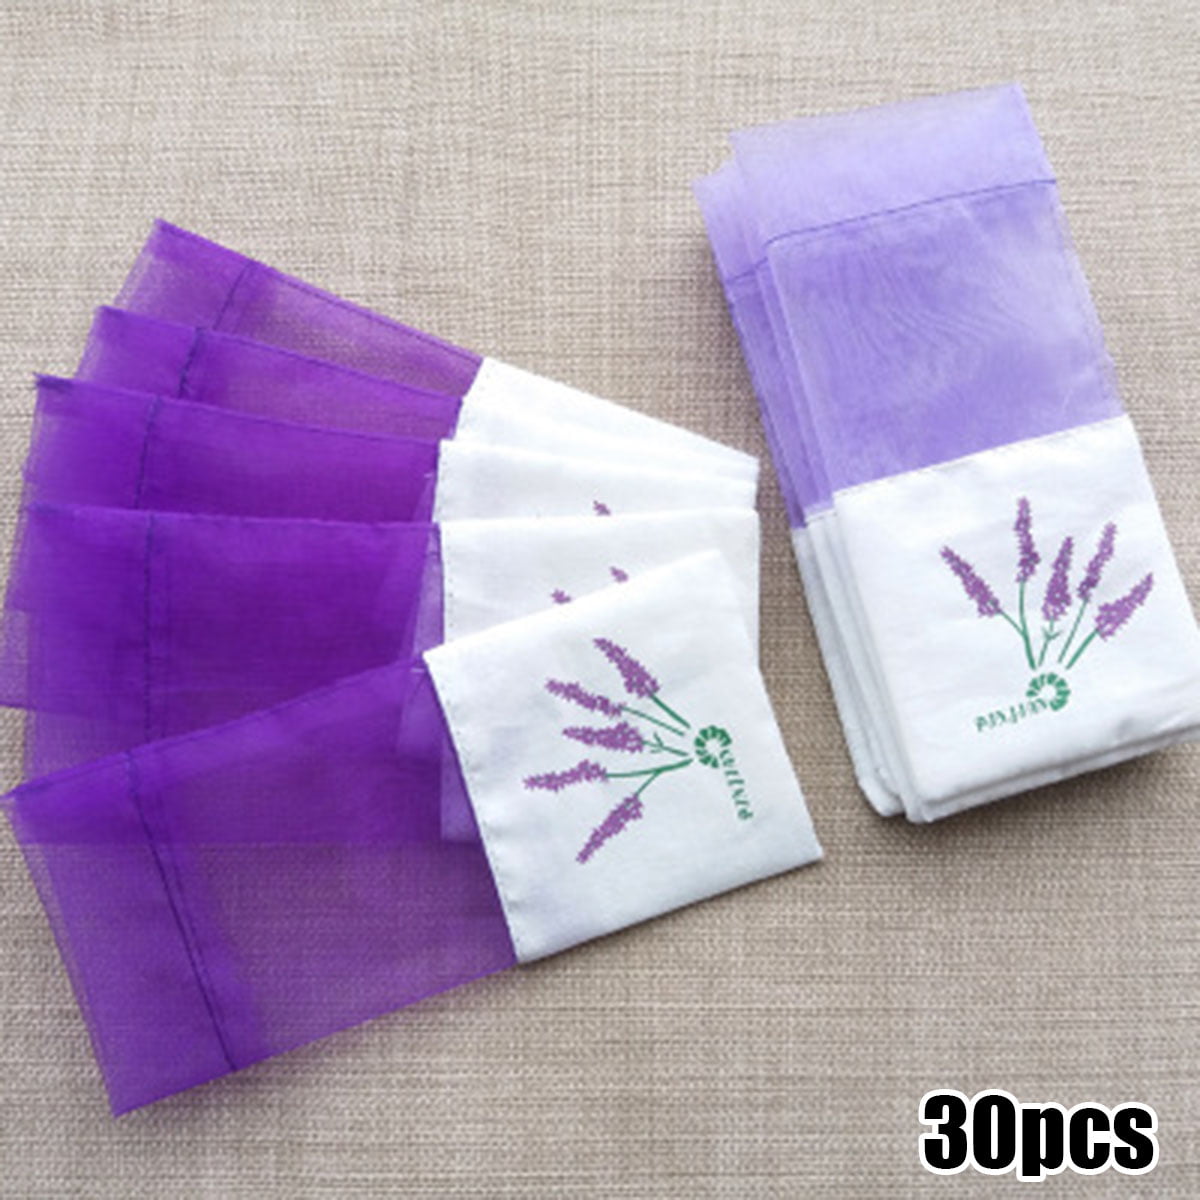 30PCS Empty Sachet Bags Portable Lavender Fragrance Bags for Storage Spice 